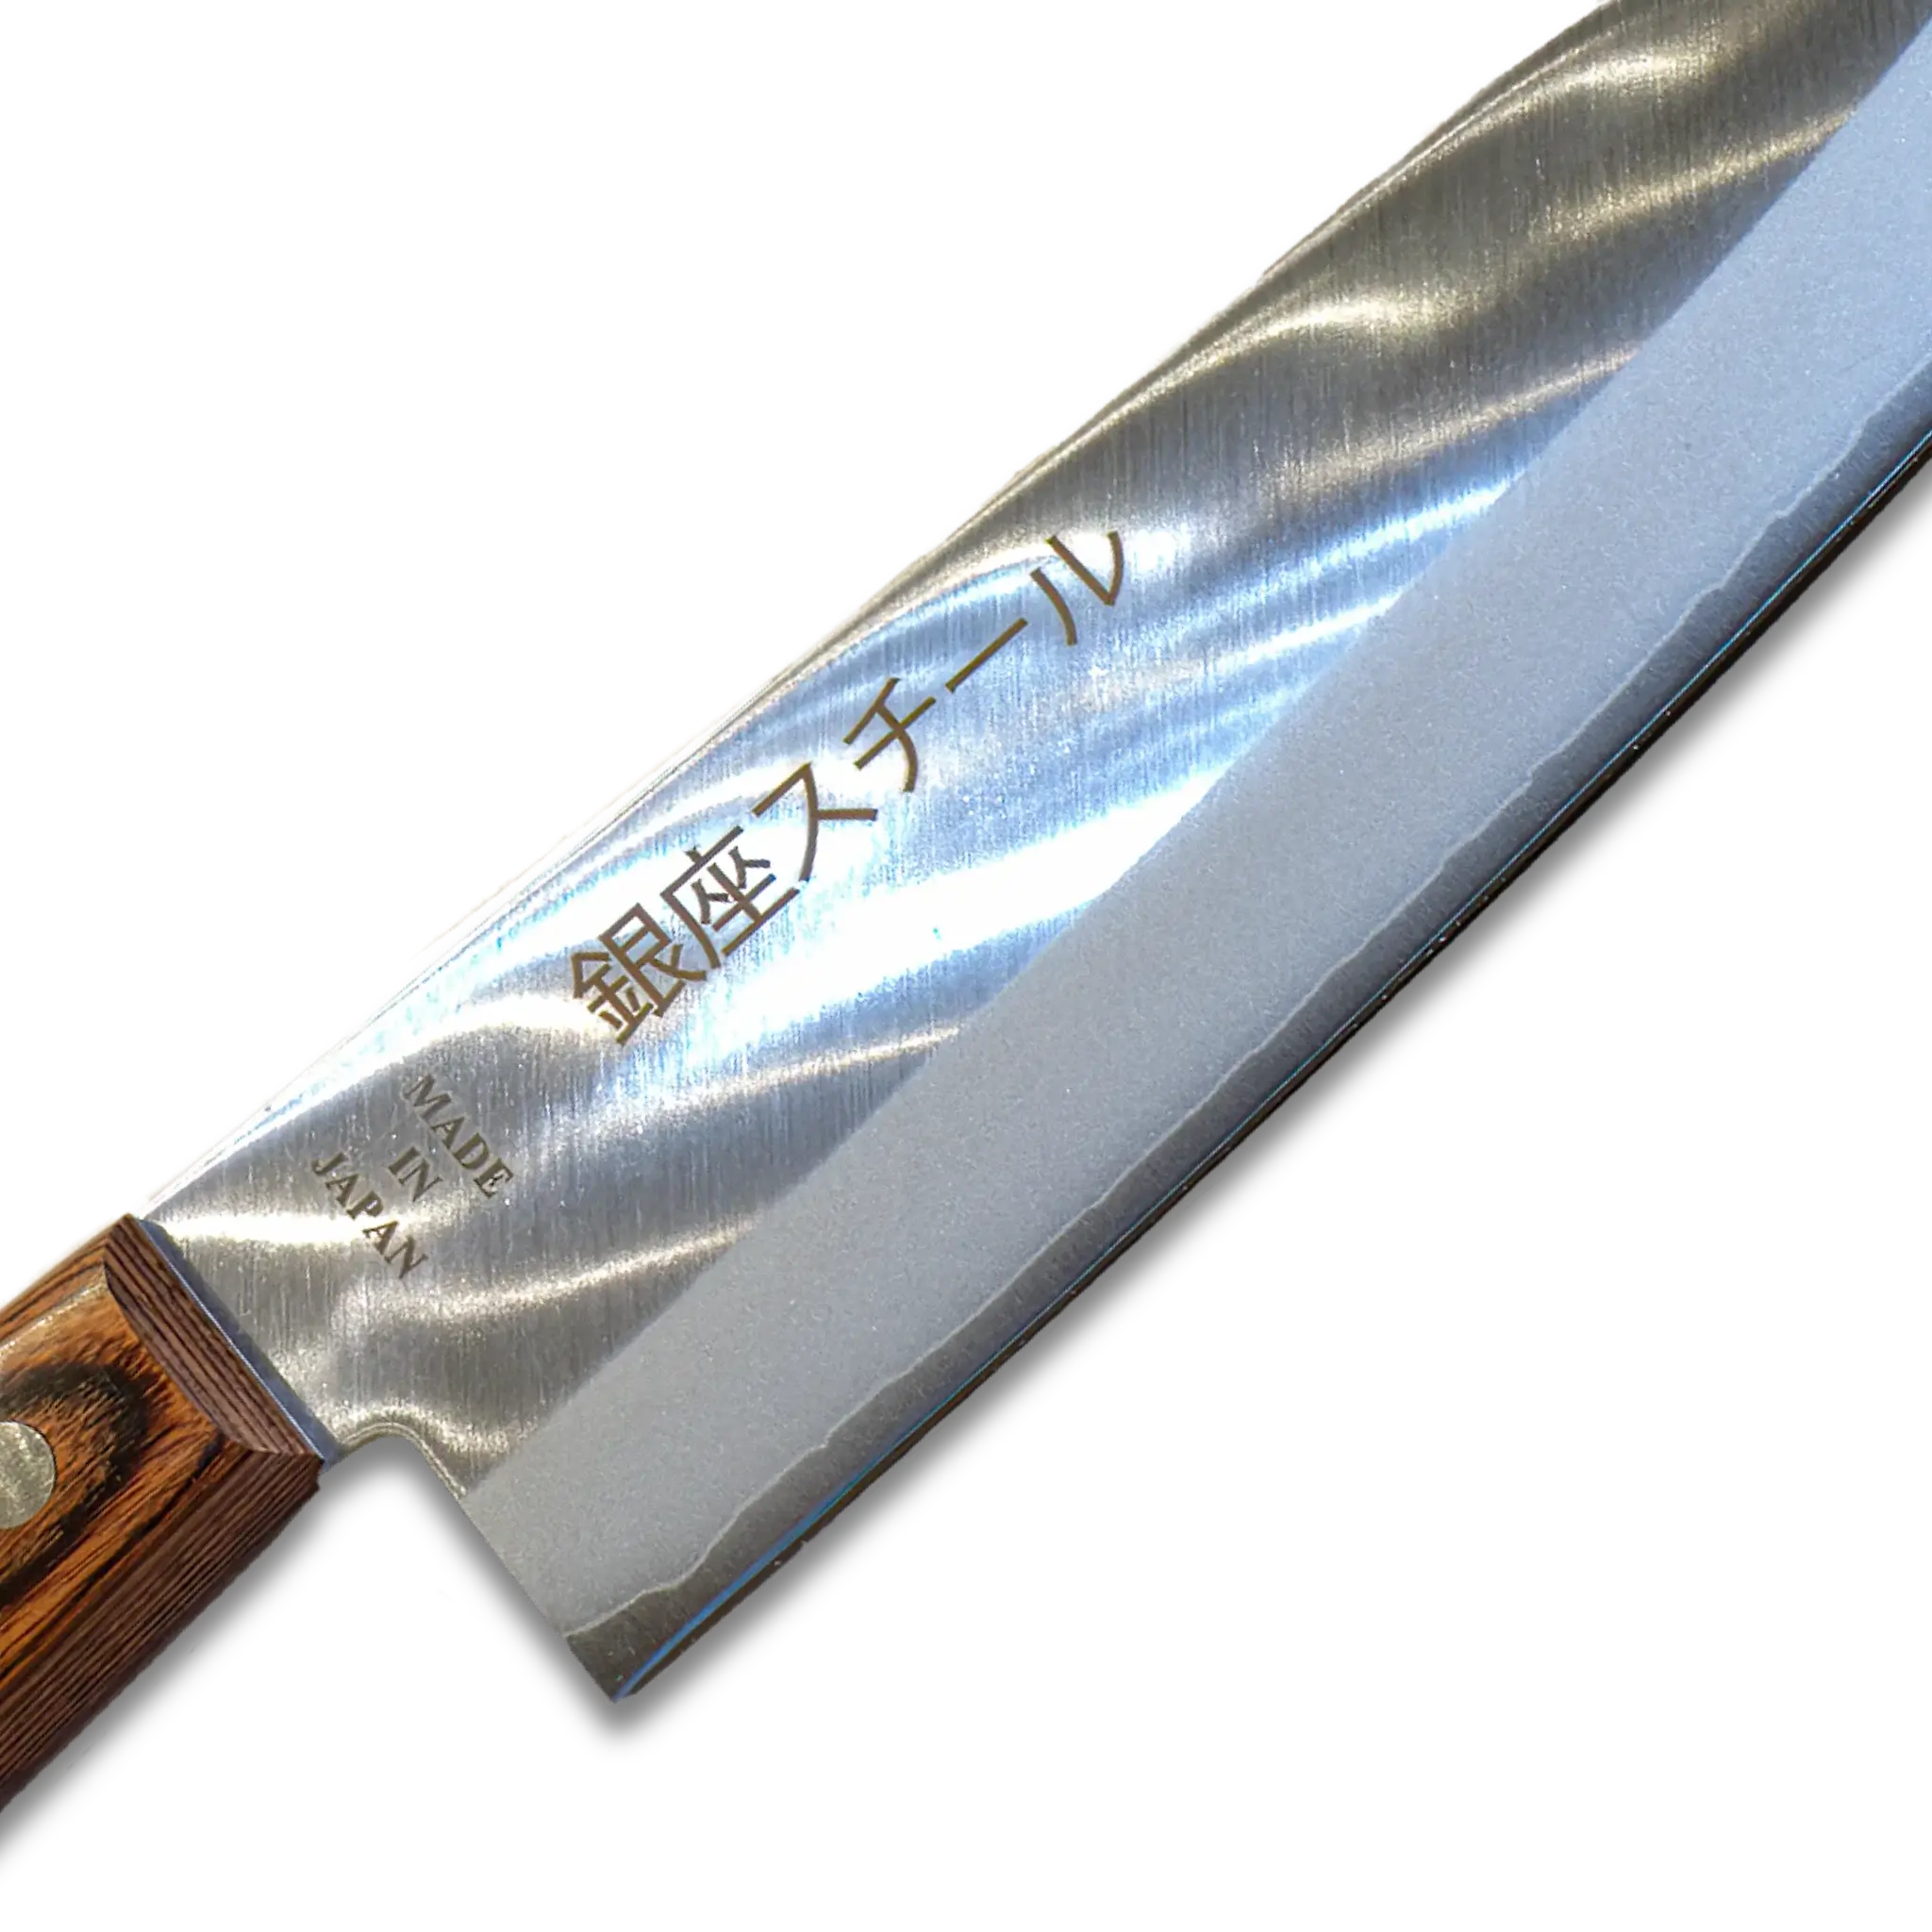 Yamato 170 - Santoku Knife 170mm Blade | VG1 DP CLAD